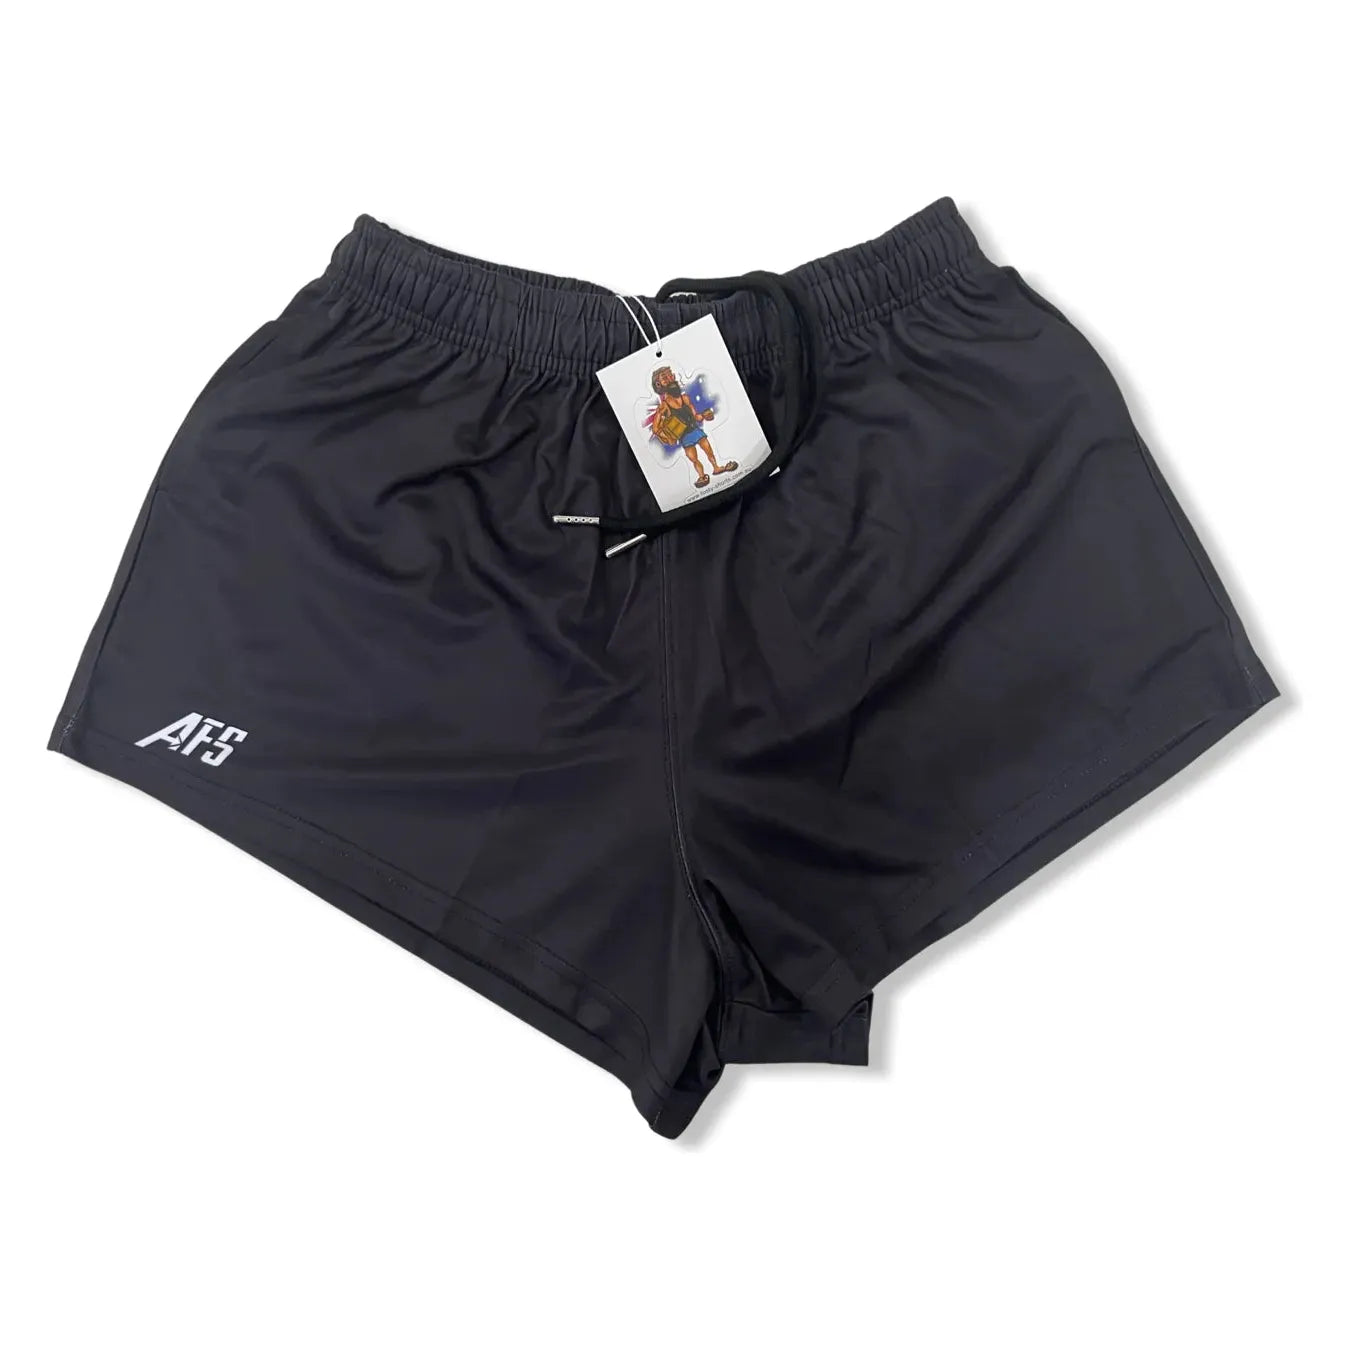 Unisex Aussie Footy Shorts Plain Black with Pockets